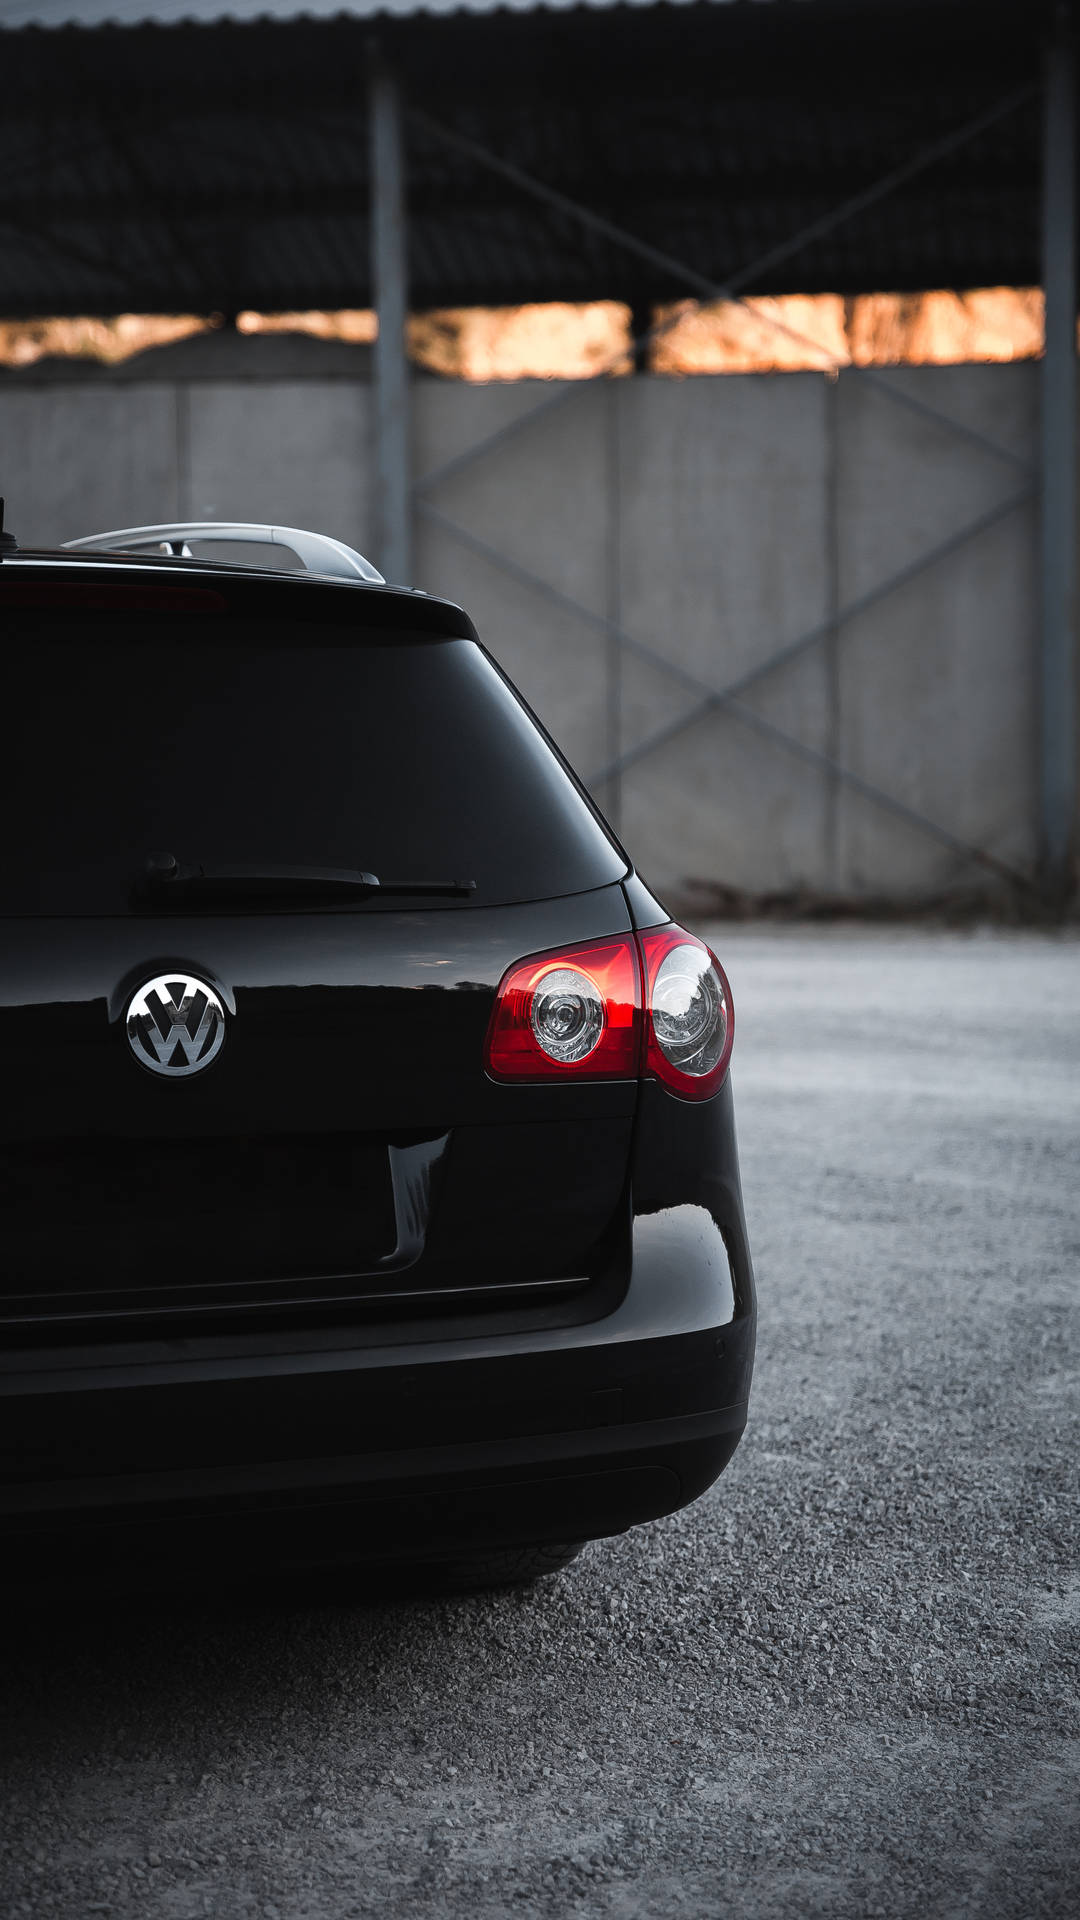 Volkswagen Golf V, Volkswagen, Car, Headlight, Rear View Background